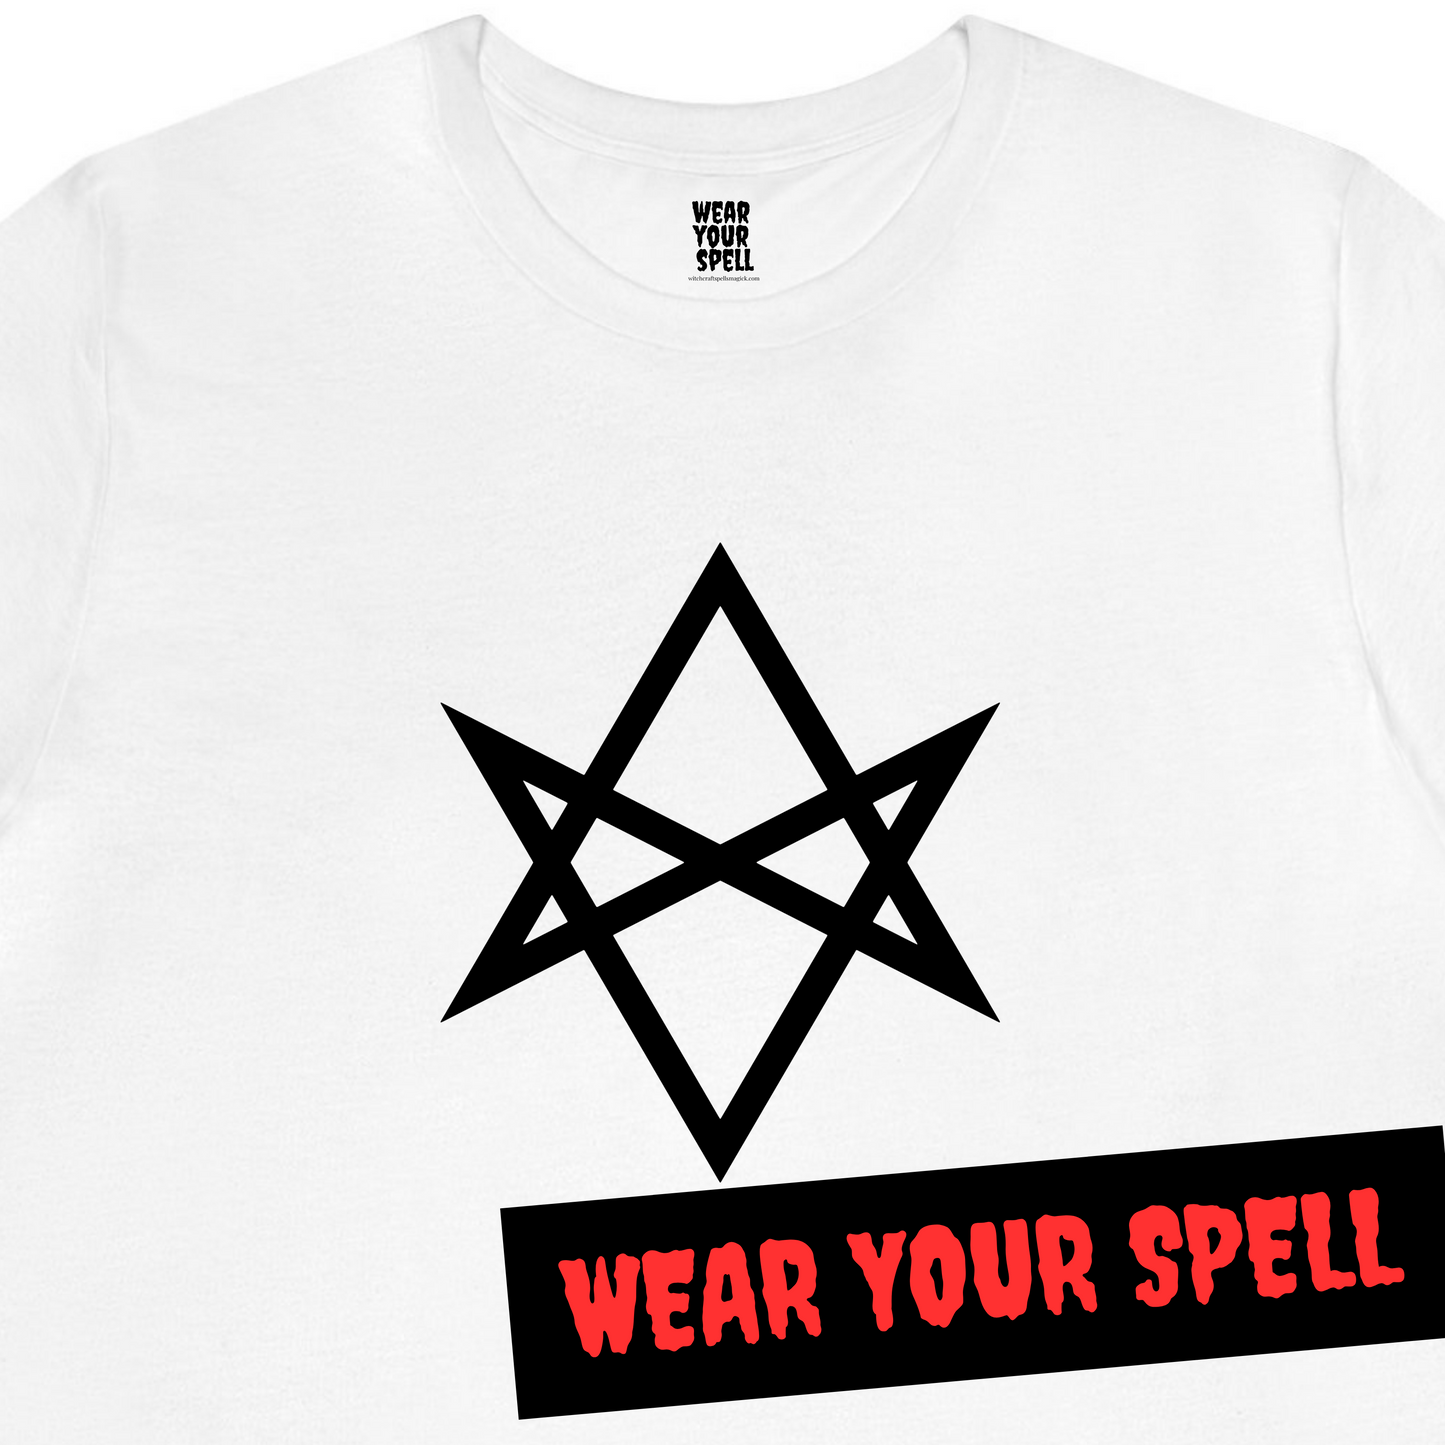 WEAR YOUR SPELL Witch T-shirt. Ward Off Negativity Spell. Magickal correspondence: Hexagram Sigil, Black Obsidian & Rosemary